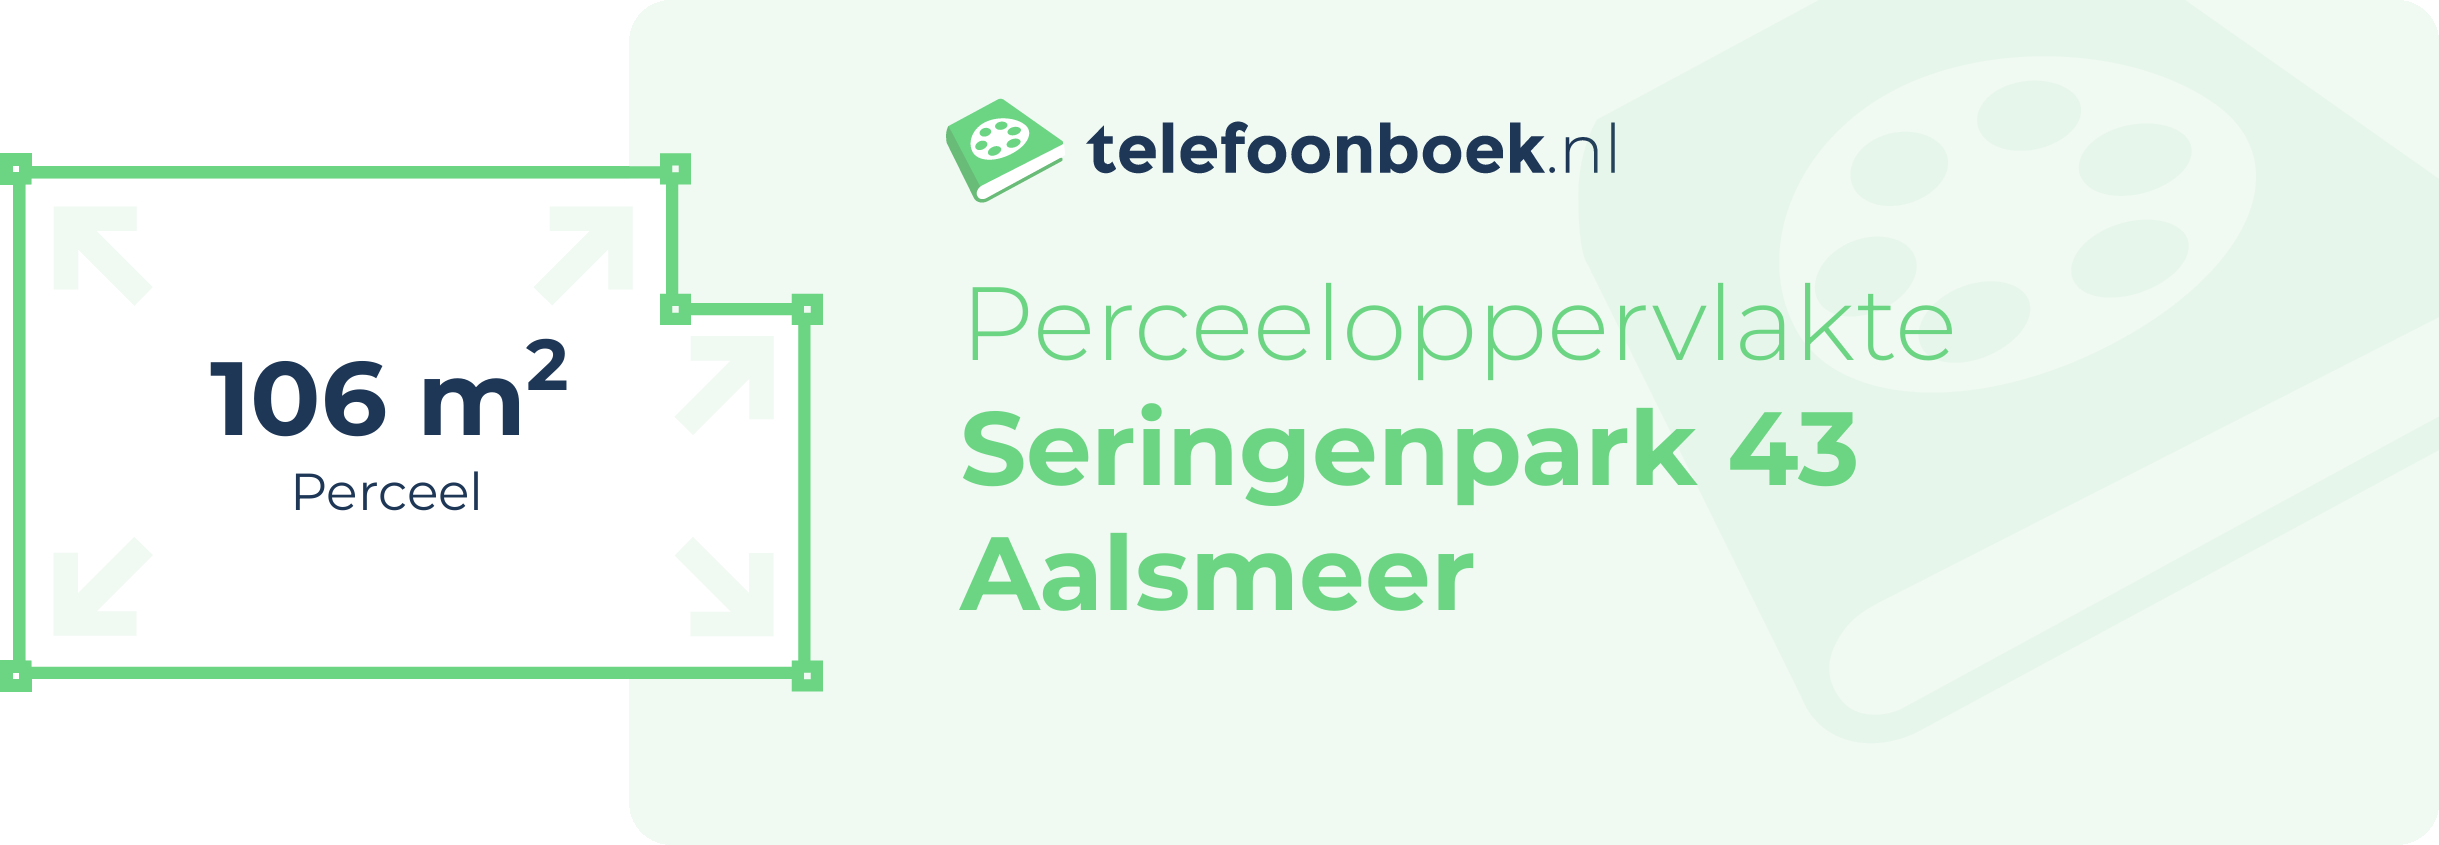 Perceeloppervlakte Seringenpark 43 Aalsmeer